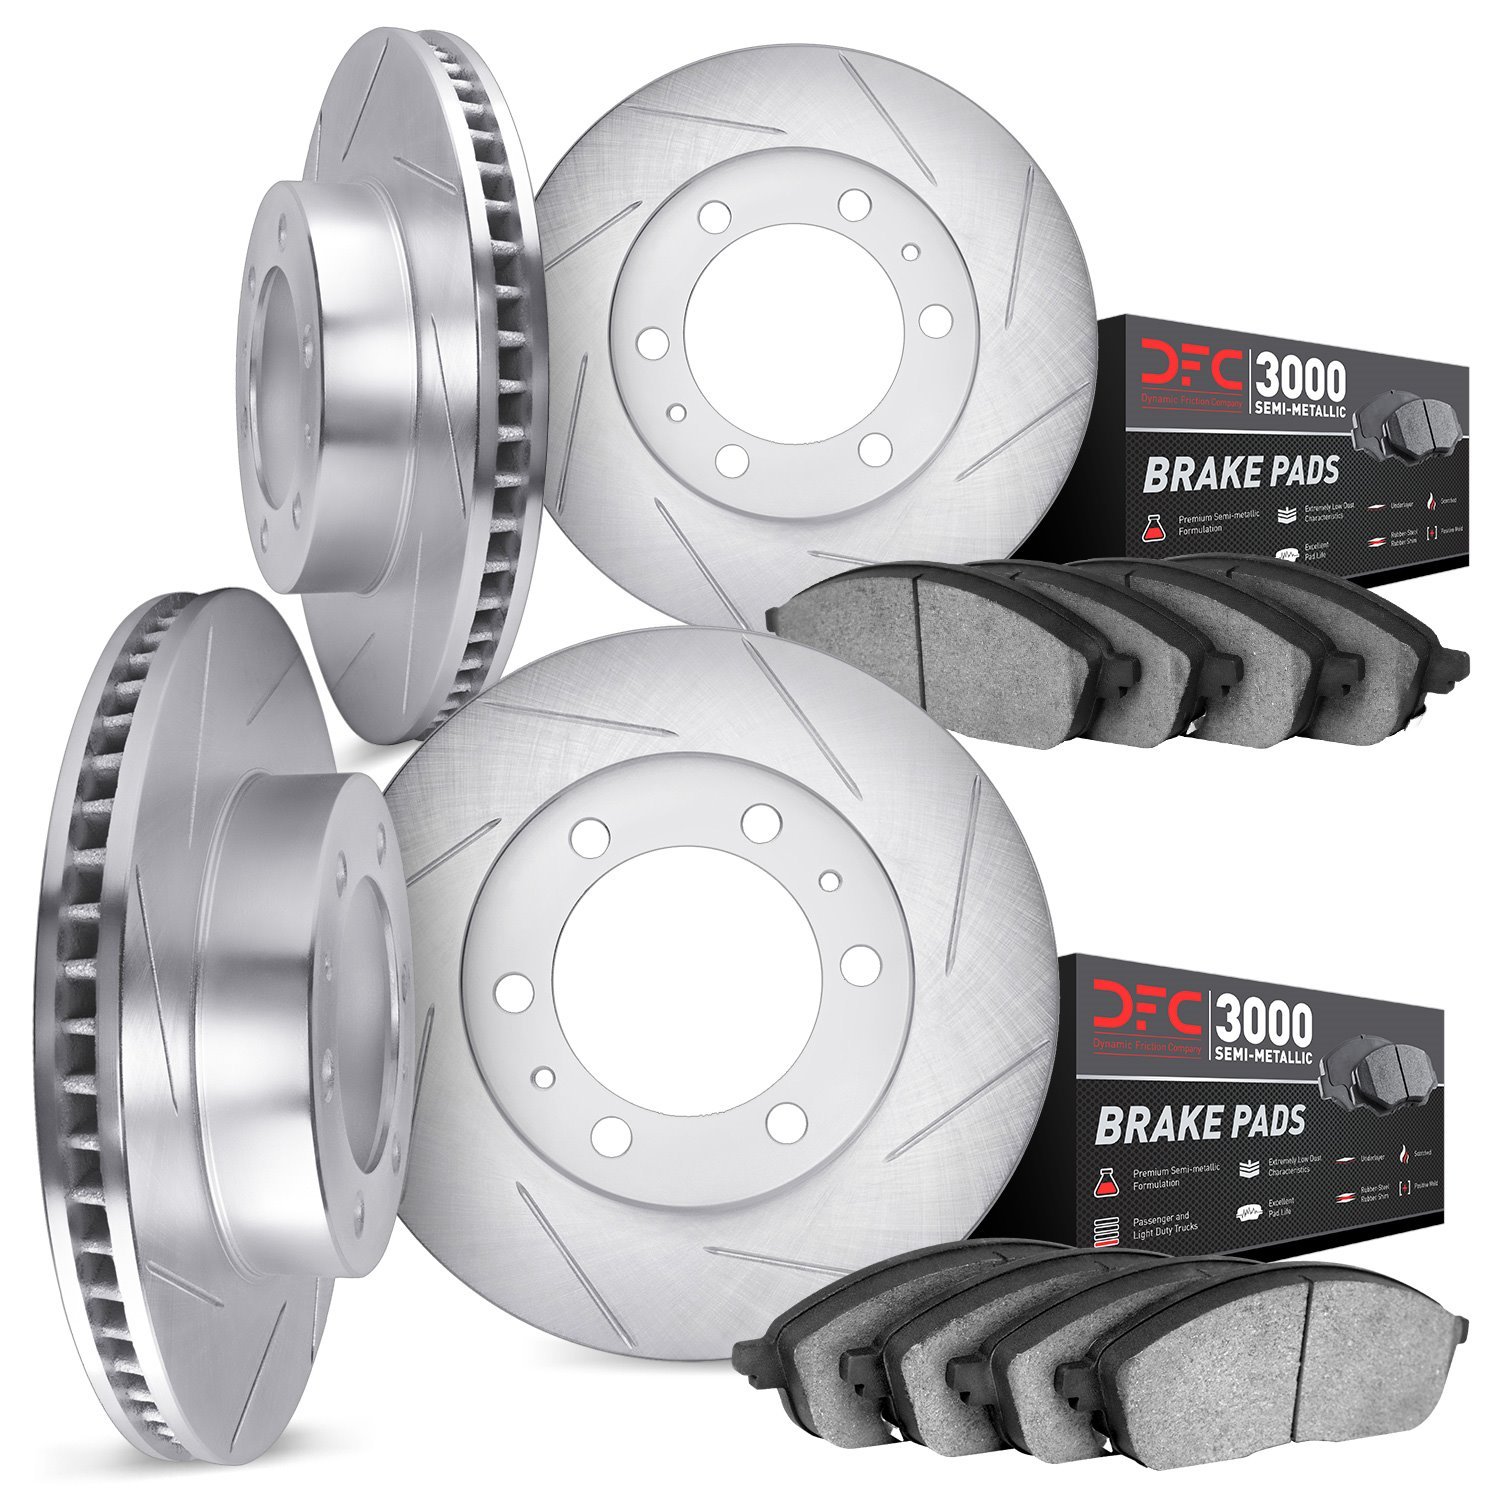 5114-67059 Slotted Brake Rotors with 3000-Series Semi-Metallic Brake Pads Kit & Hardware [Silver], 2005-2021 Multiple Makes/Mode